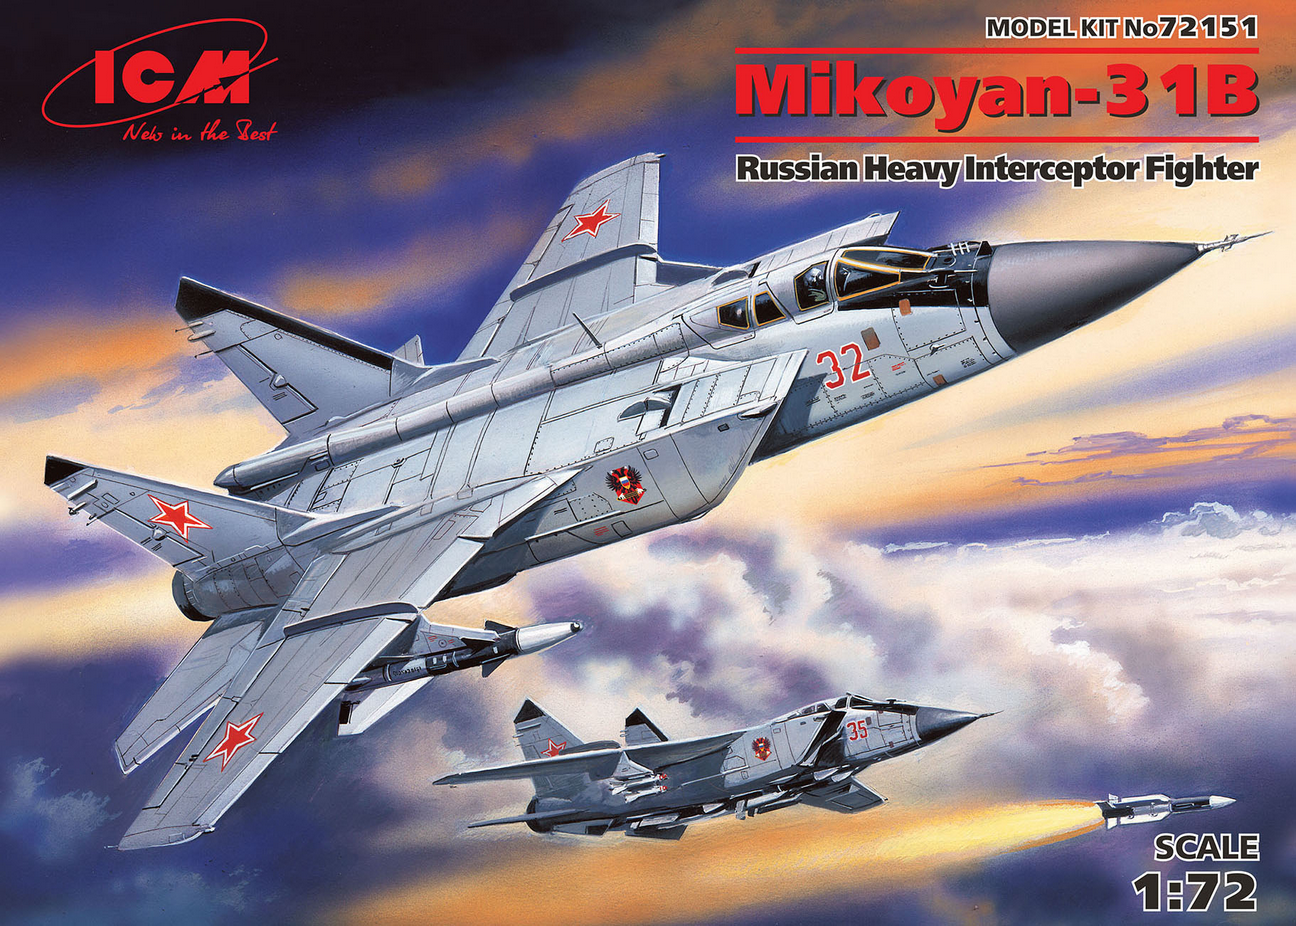 Mikoyan-31B - Russian Heavy Interceptor Fighter - ICM 1/72